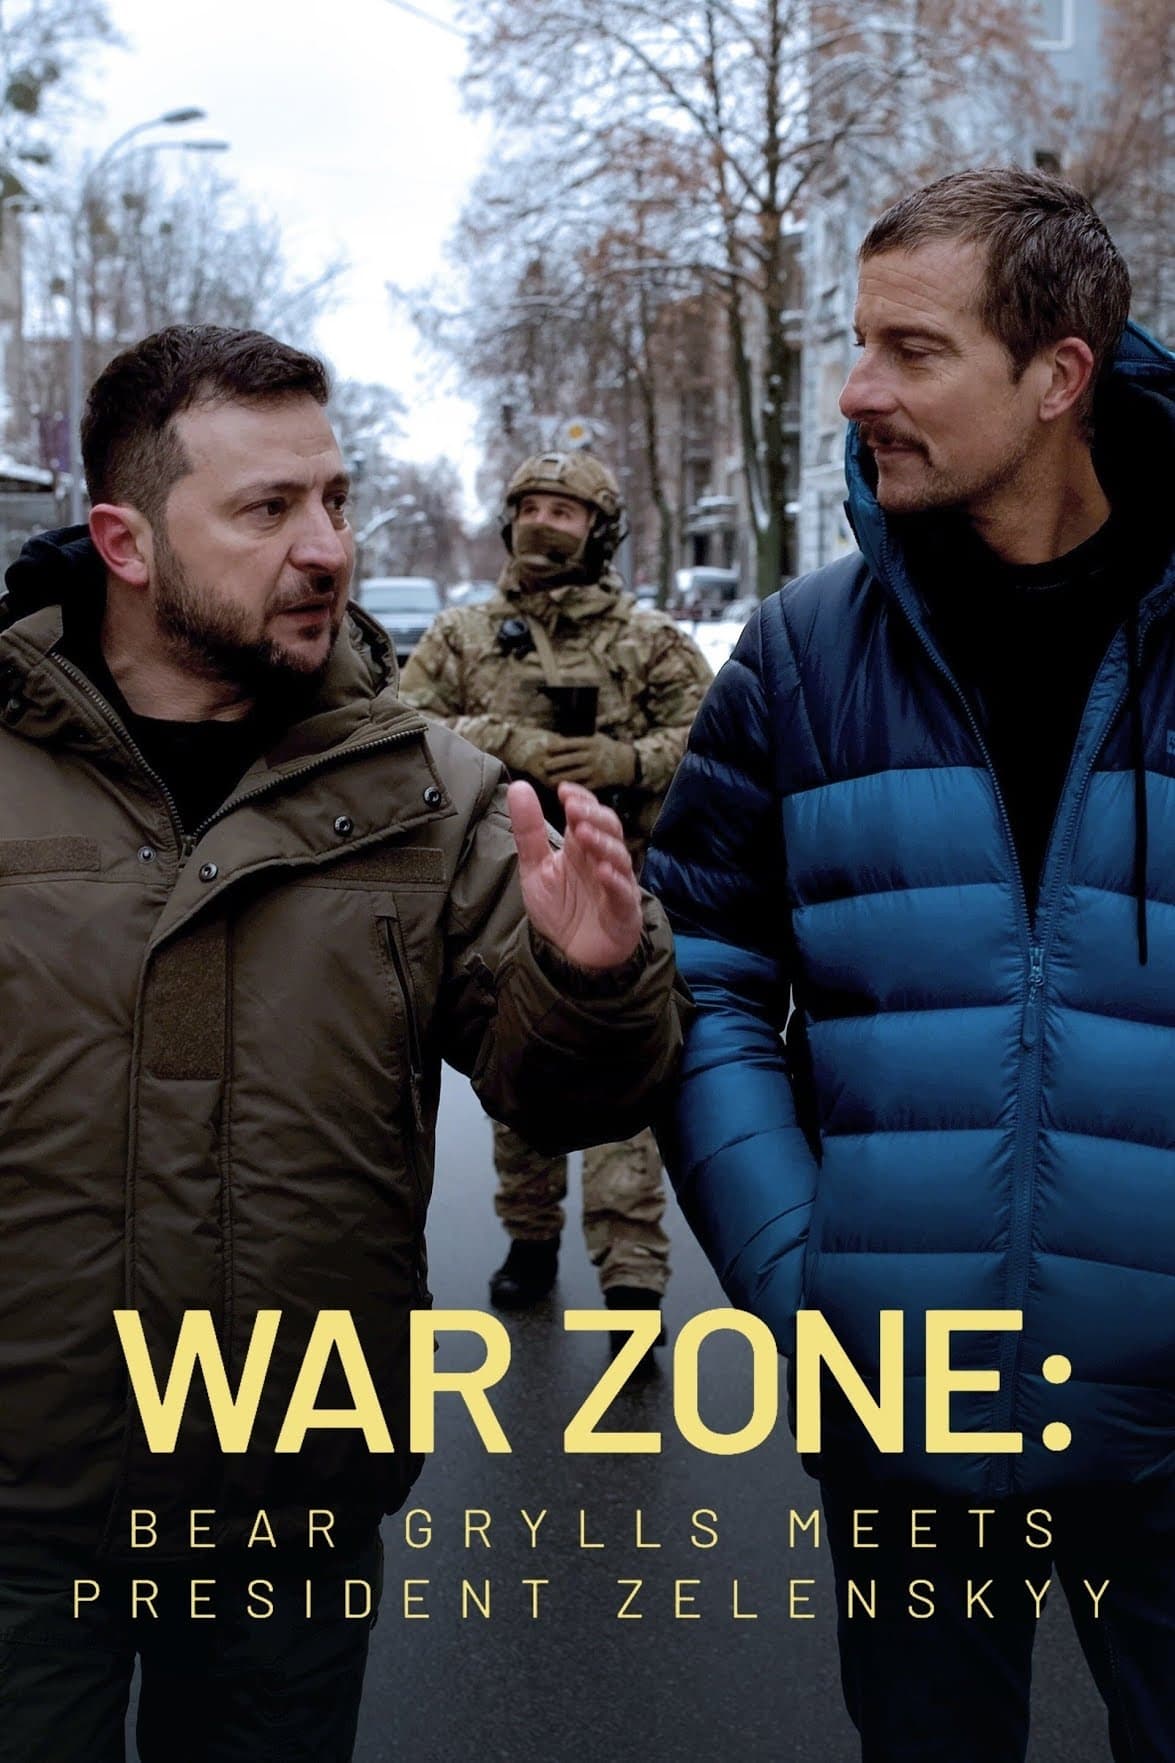 War Zone: Bear Grylls meets President Zelenskyy (2023) 720p HEVC HDRip S01E01 [Dual Audio] [Hindi or English] x265 ESubs [400MB]